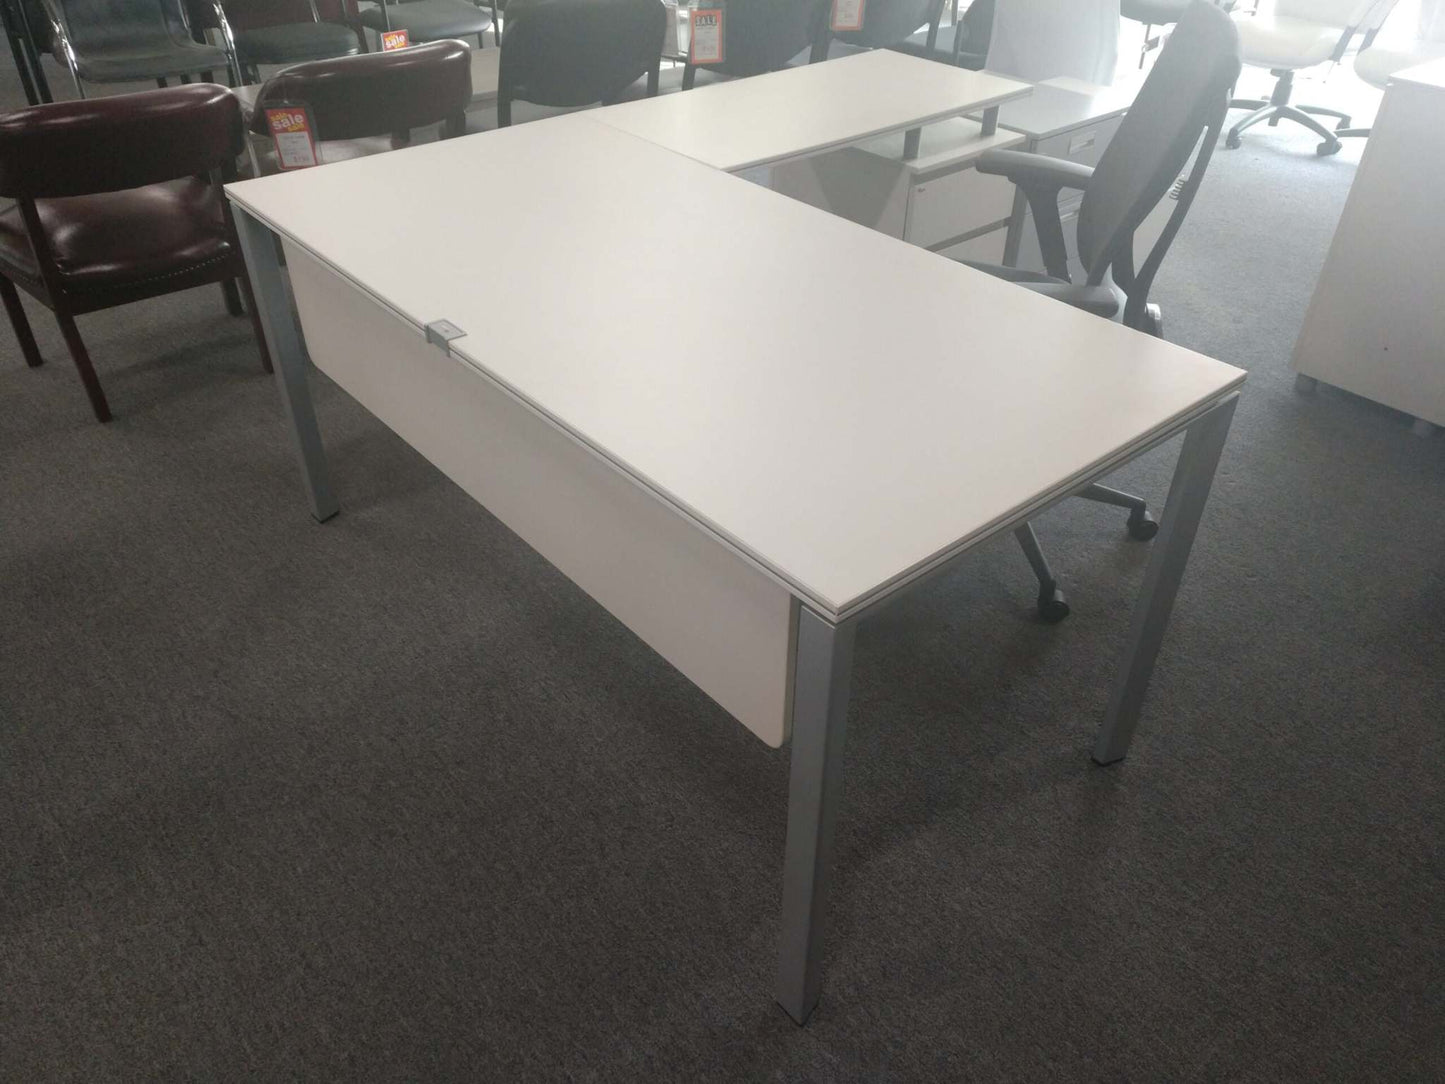 New - White L Shape Desk w/ Modesty Panel by Fursys